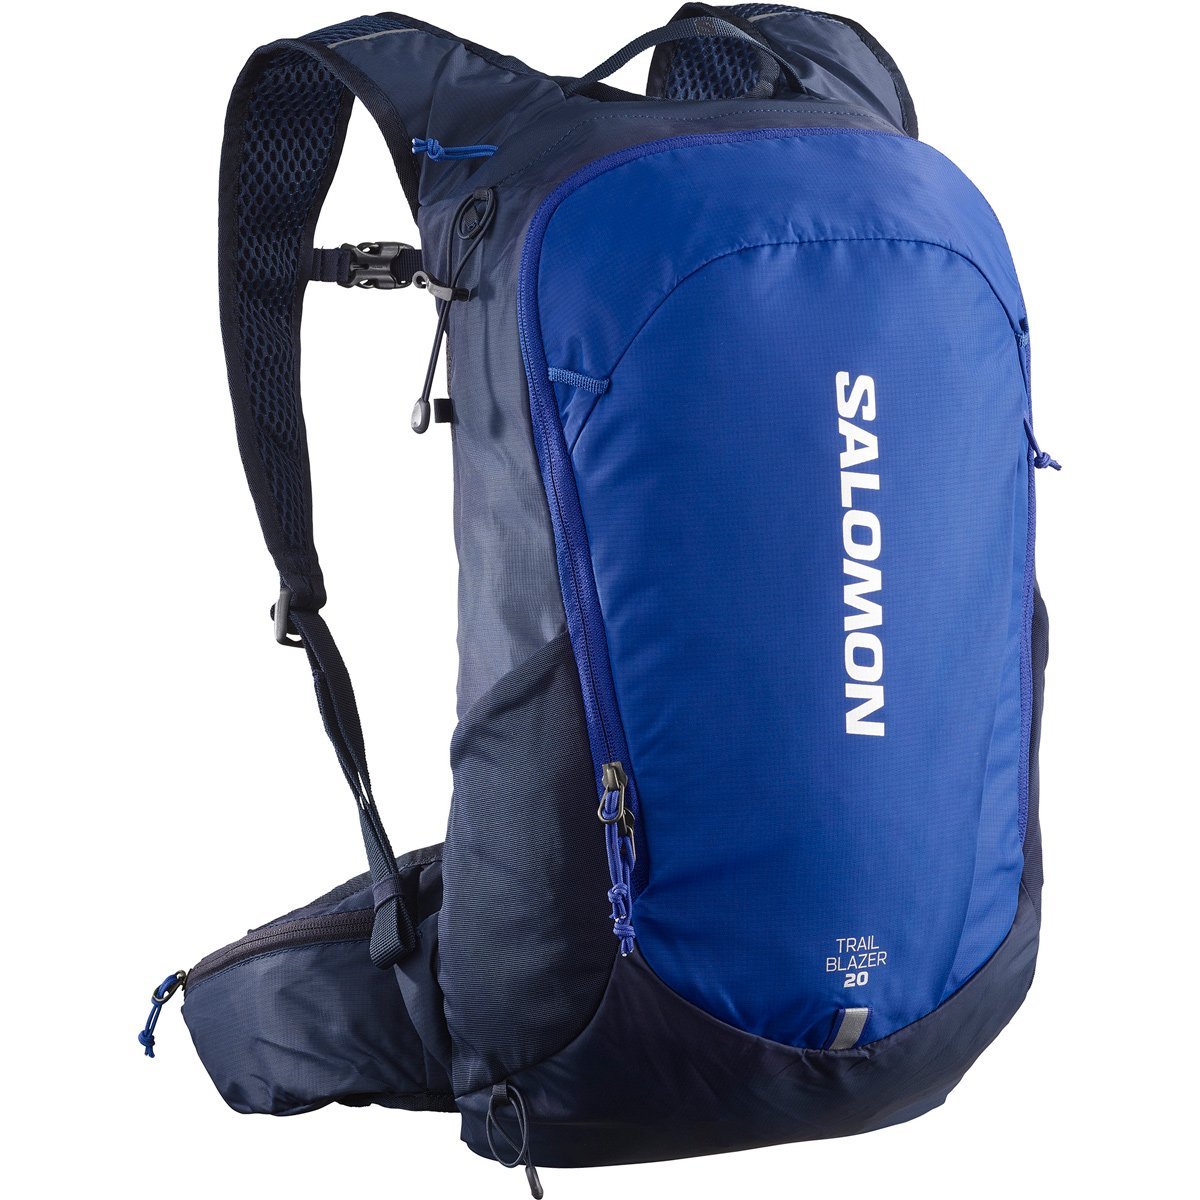 Salomon Trailblazer 20 Hiking Rygsæk, blå